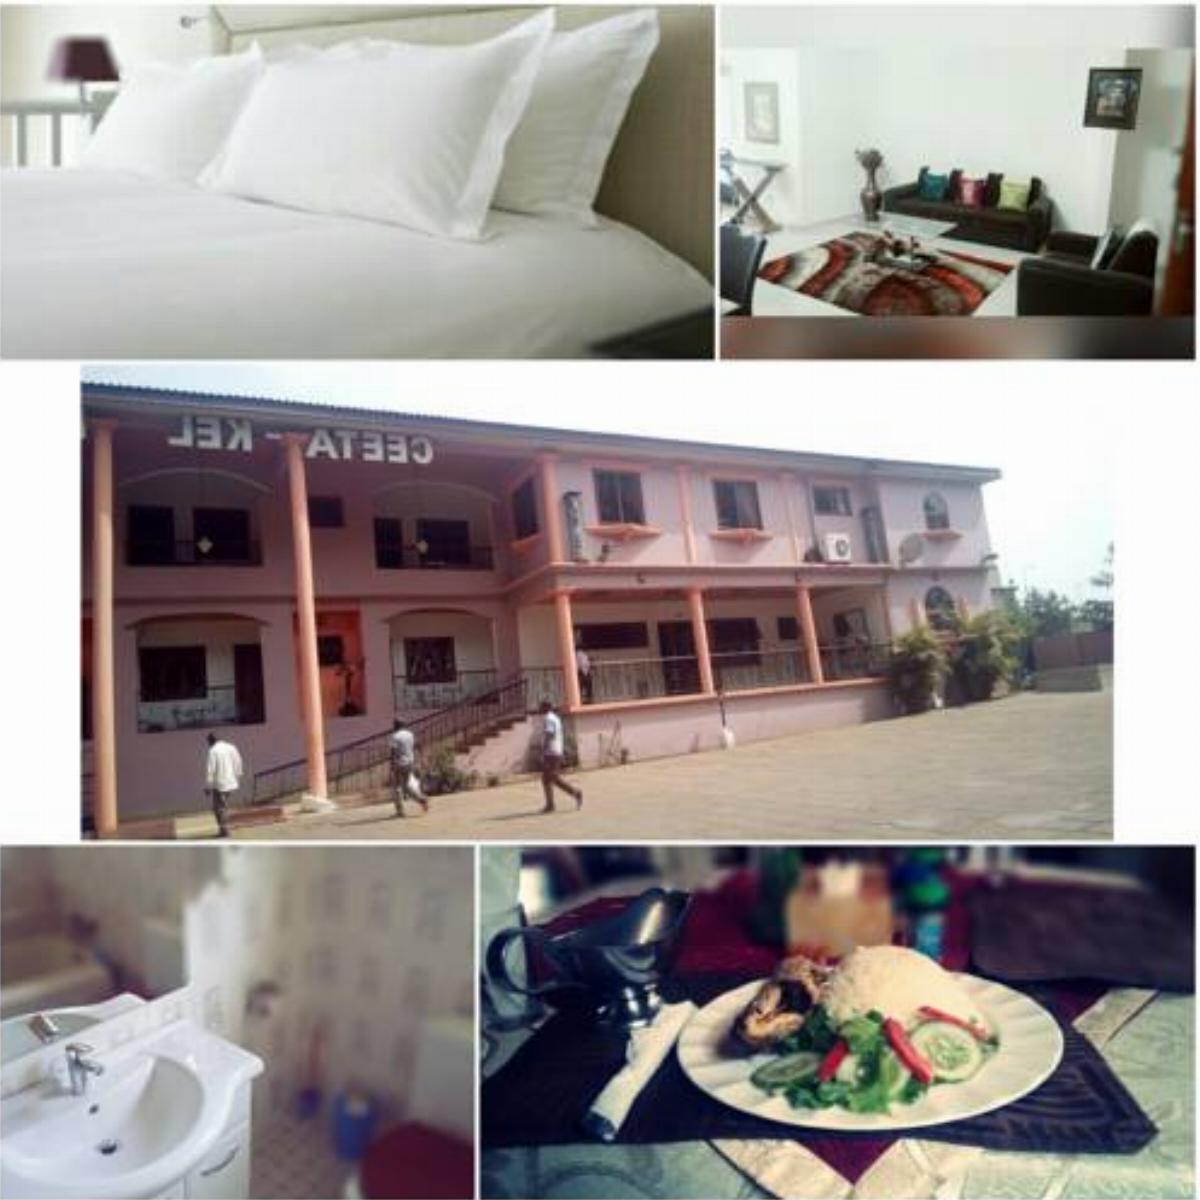 Ceeta-Kel Hotel Hotel Kumasi Ghana